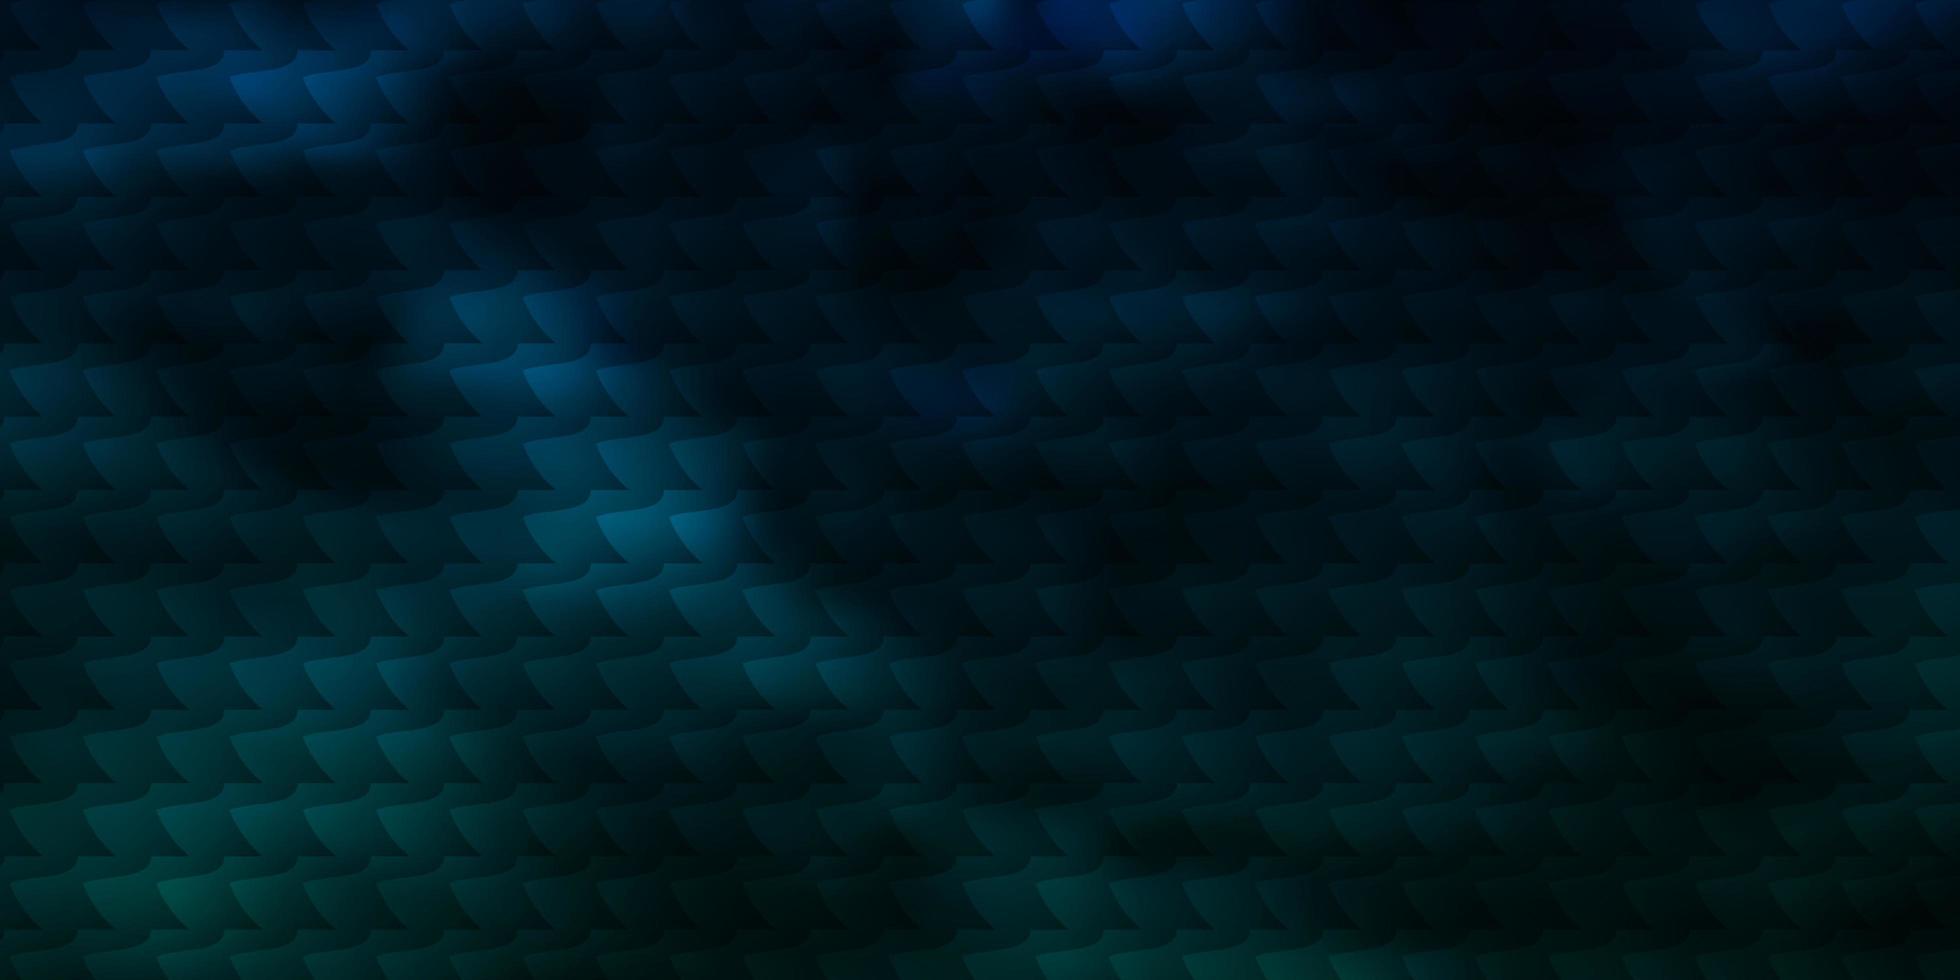 Dark Blue Green vector backdrop with rectangles